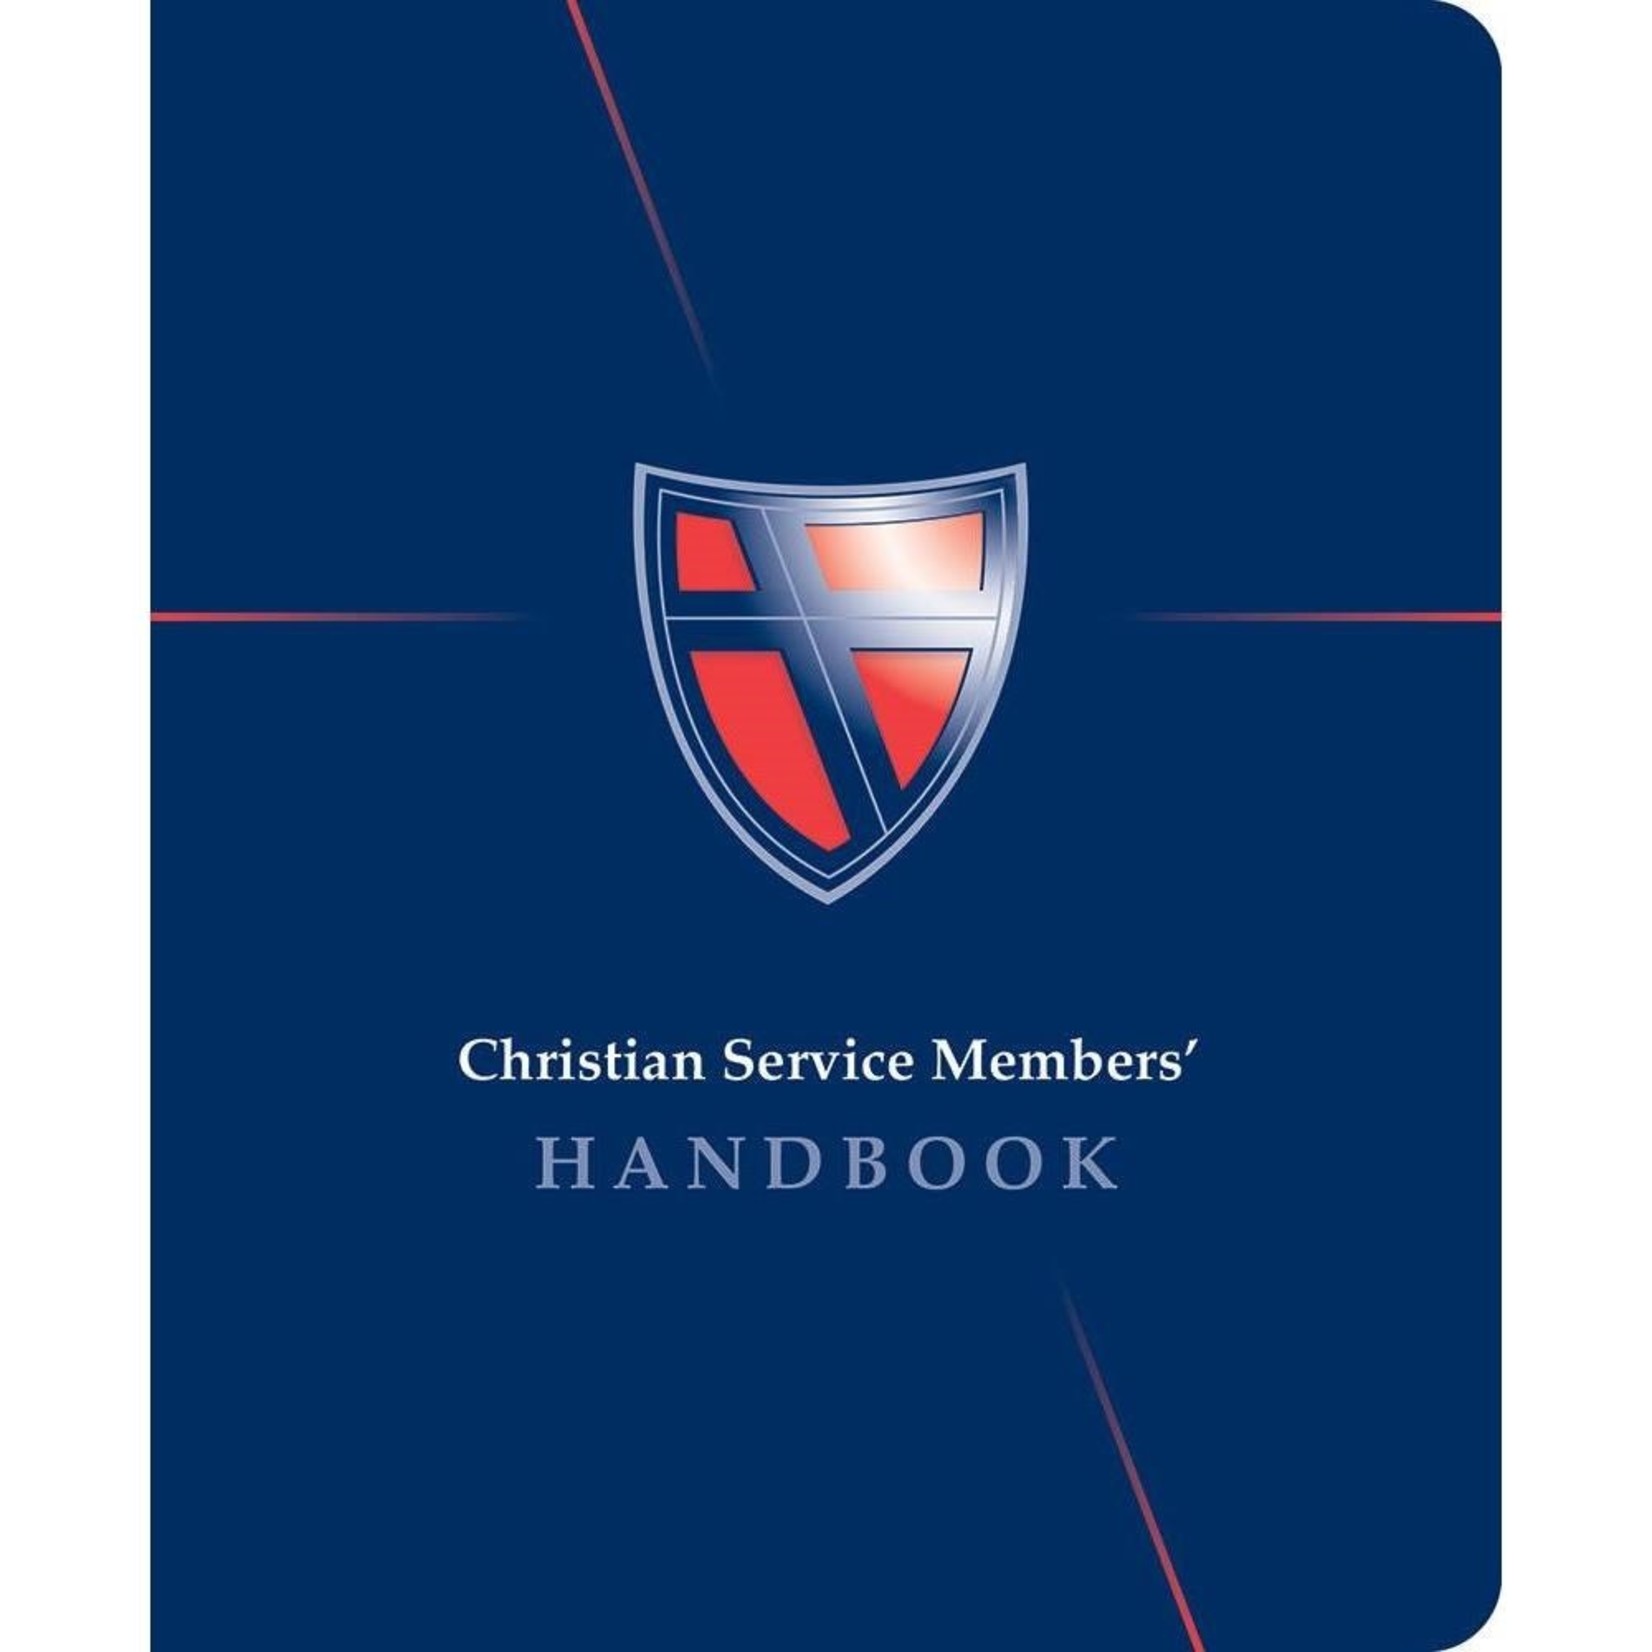 Christian Service Members' Handbook